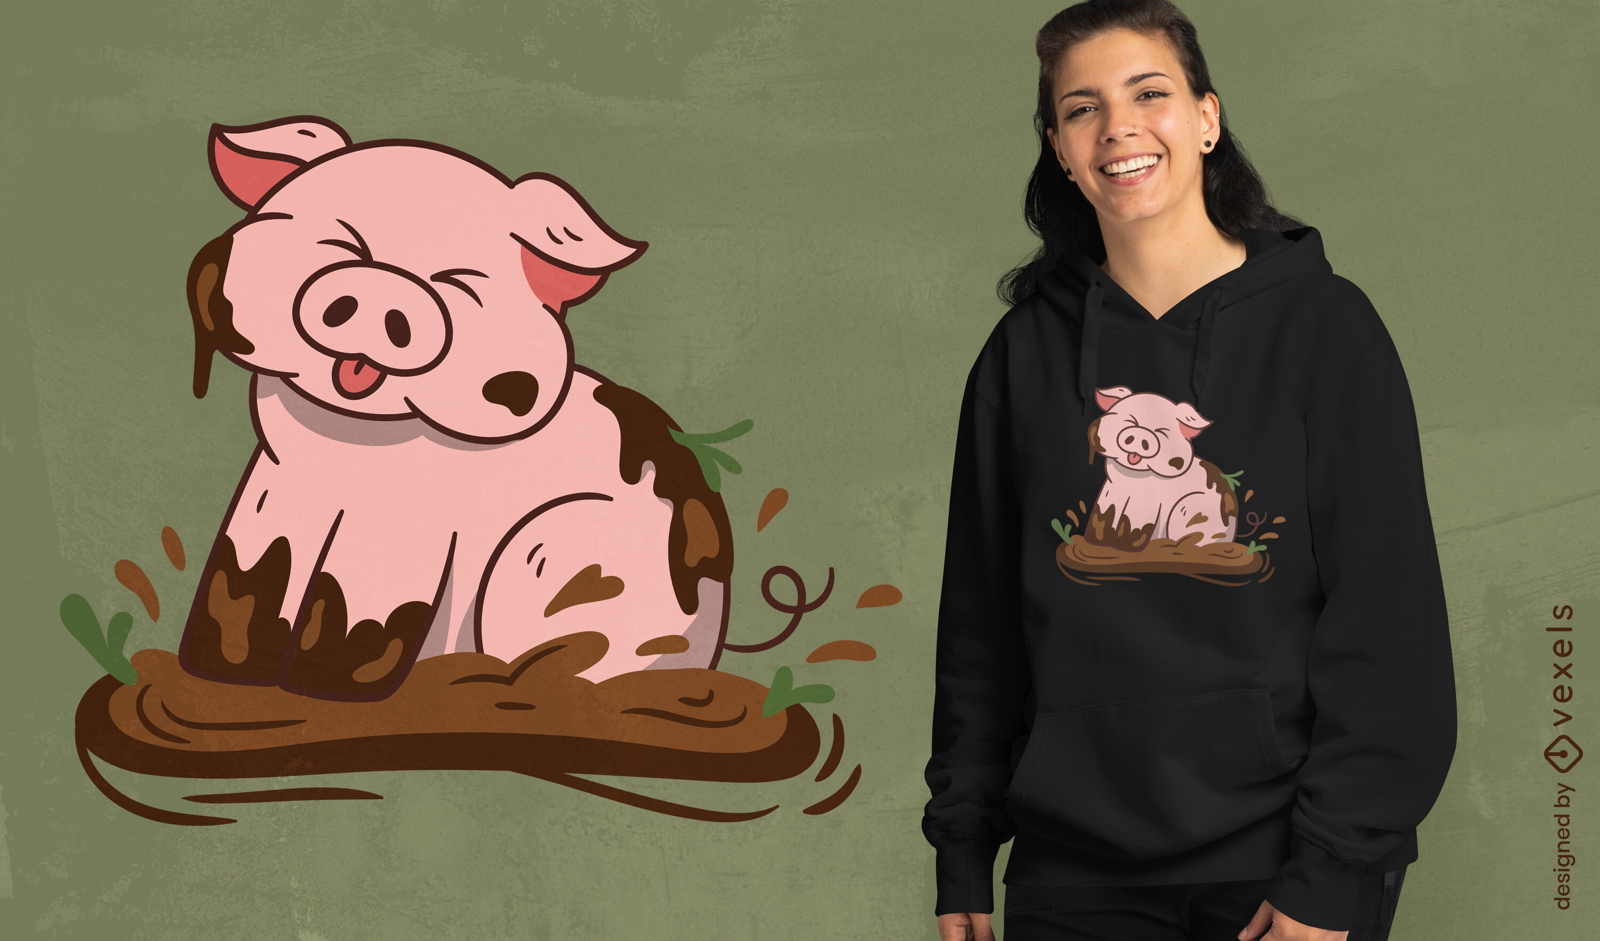 Muddy pig t-shirt design